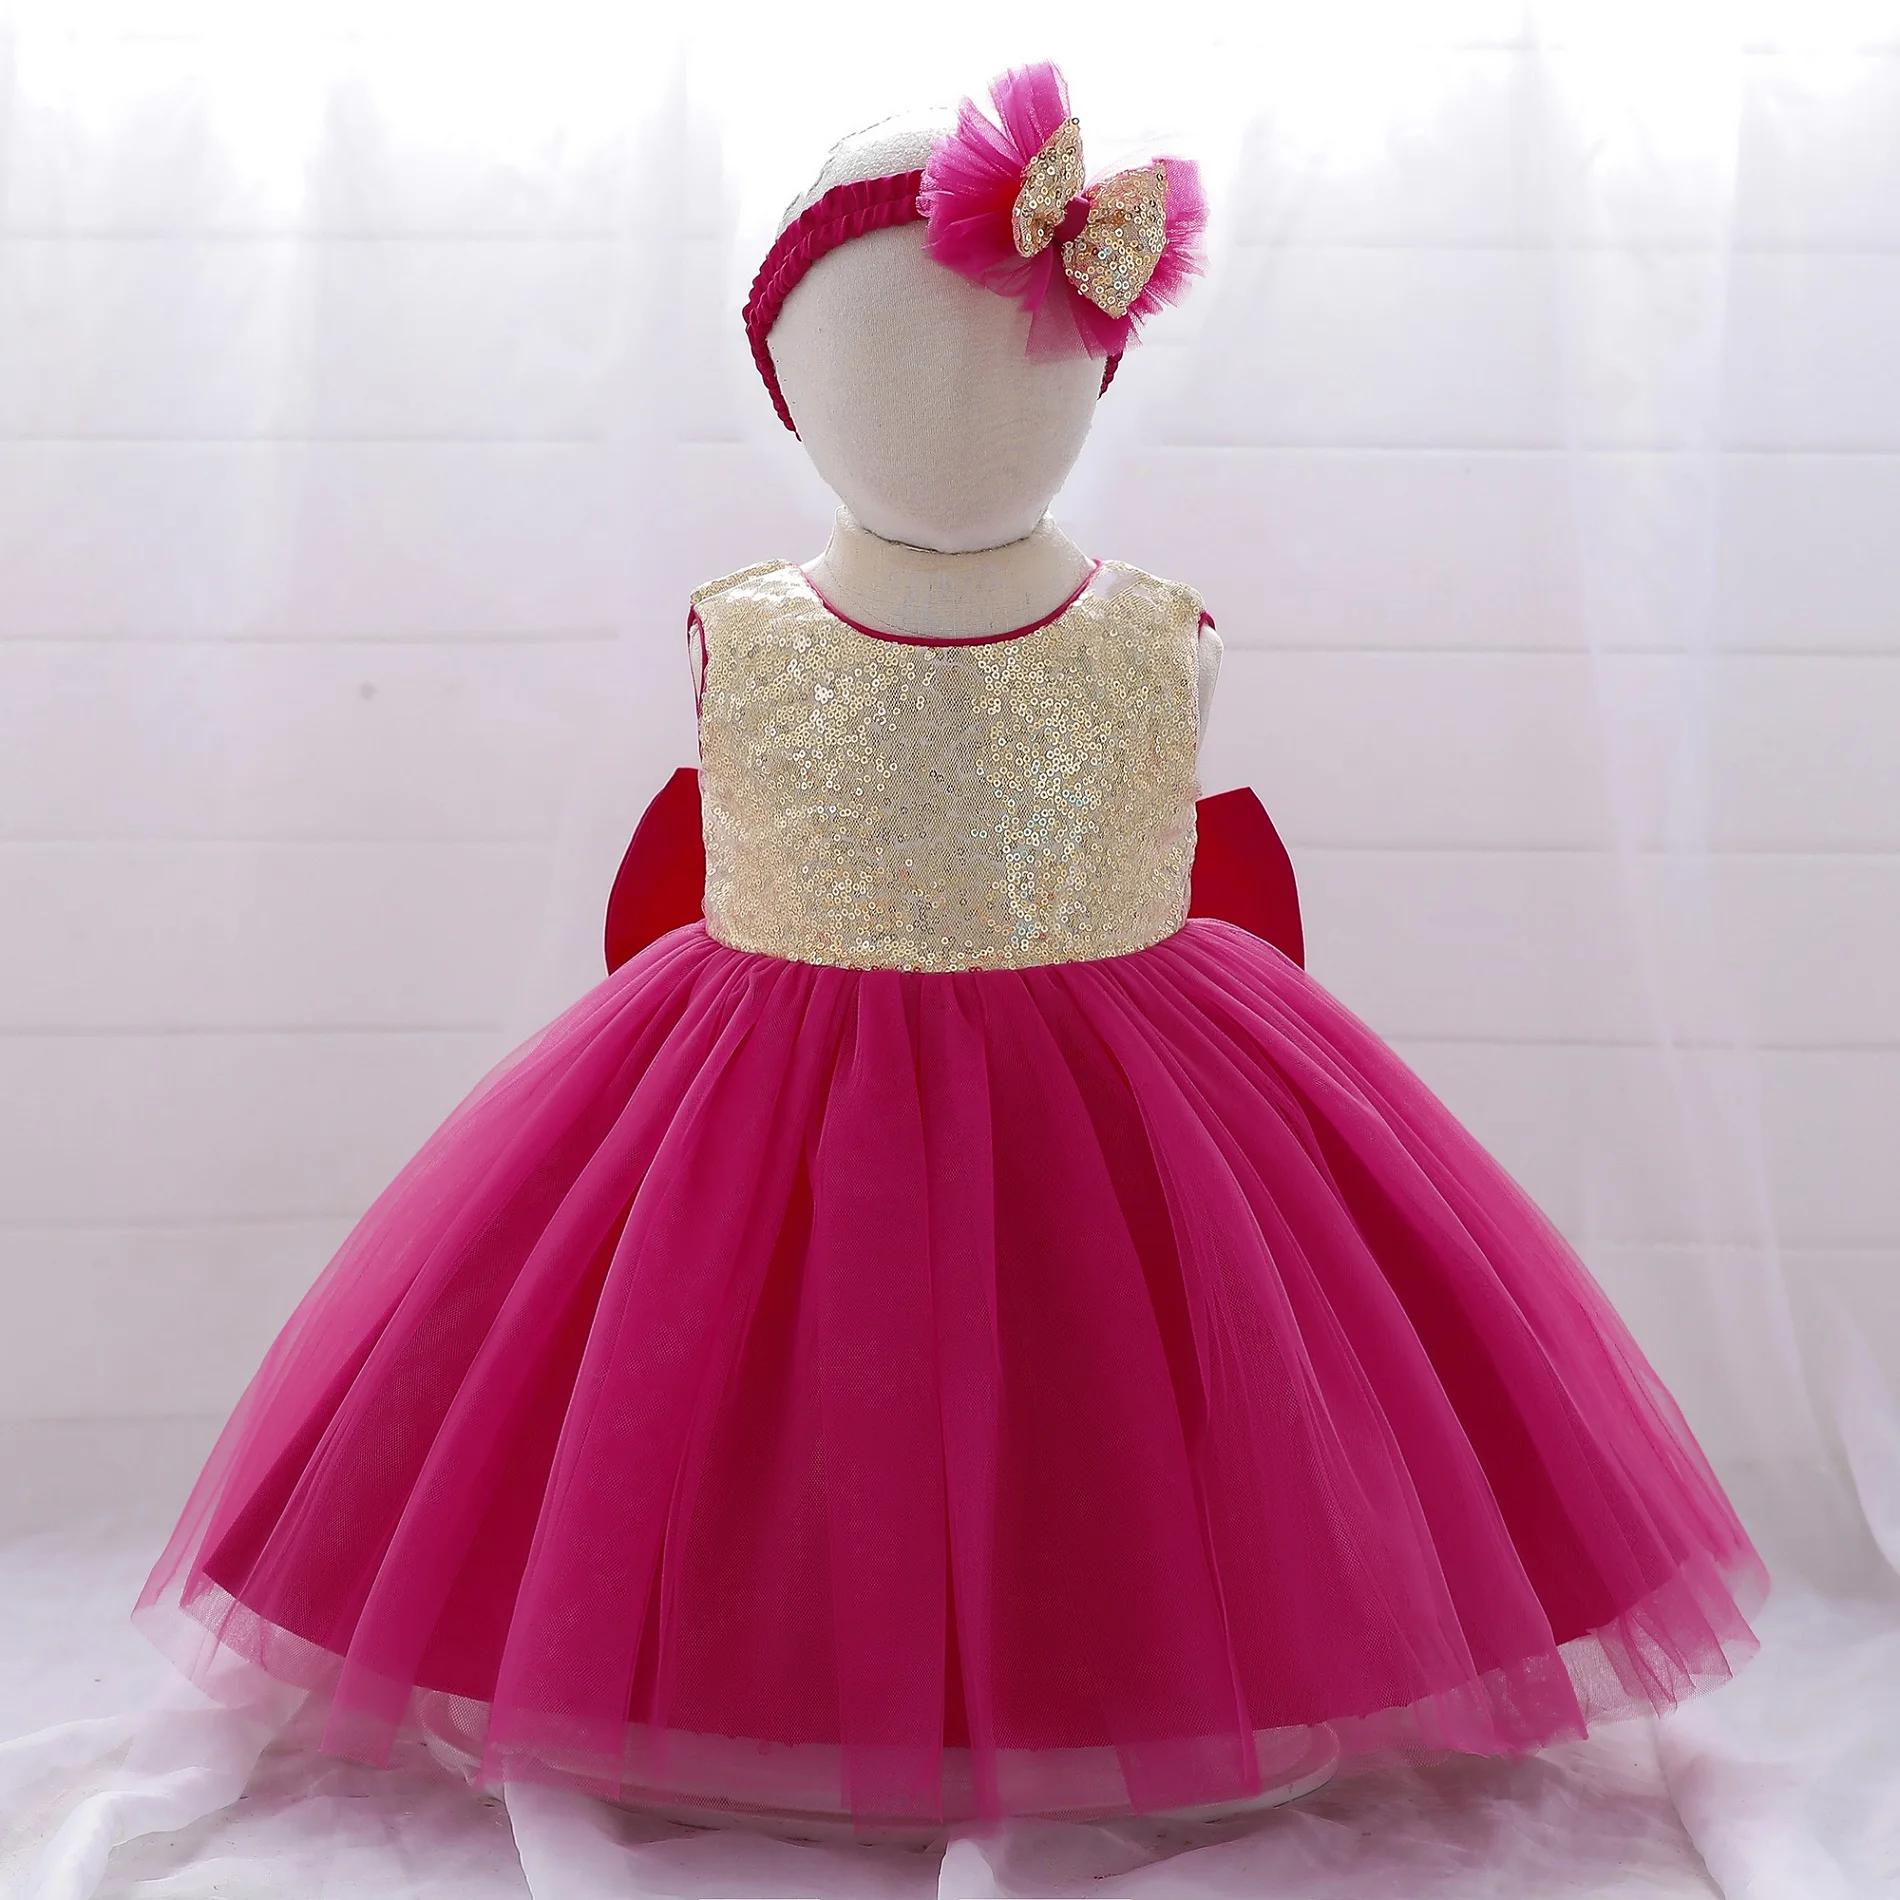 

Girls Party Dresses 4 Colors 70cm-120cm Wedding Dress Birthday Costume Children Baby Ball Gown Vestidos Photograph Clothing